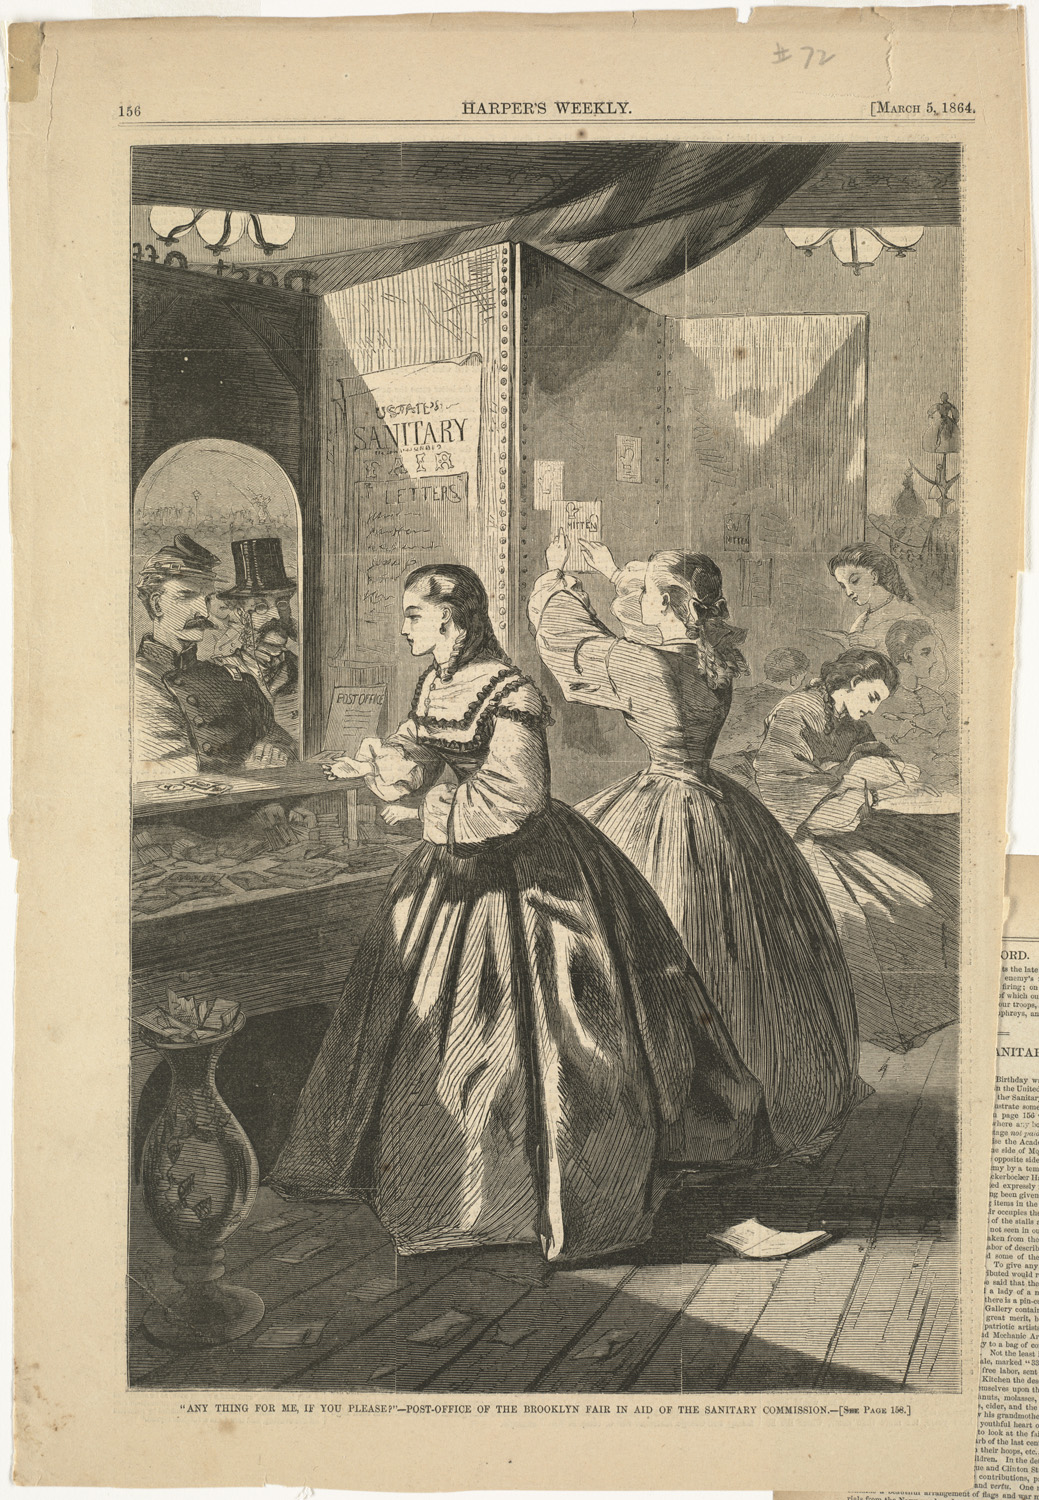 an illustration of two women in dress